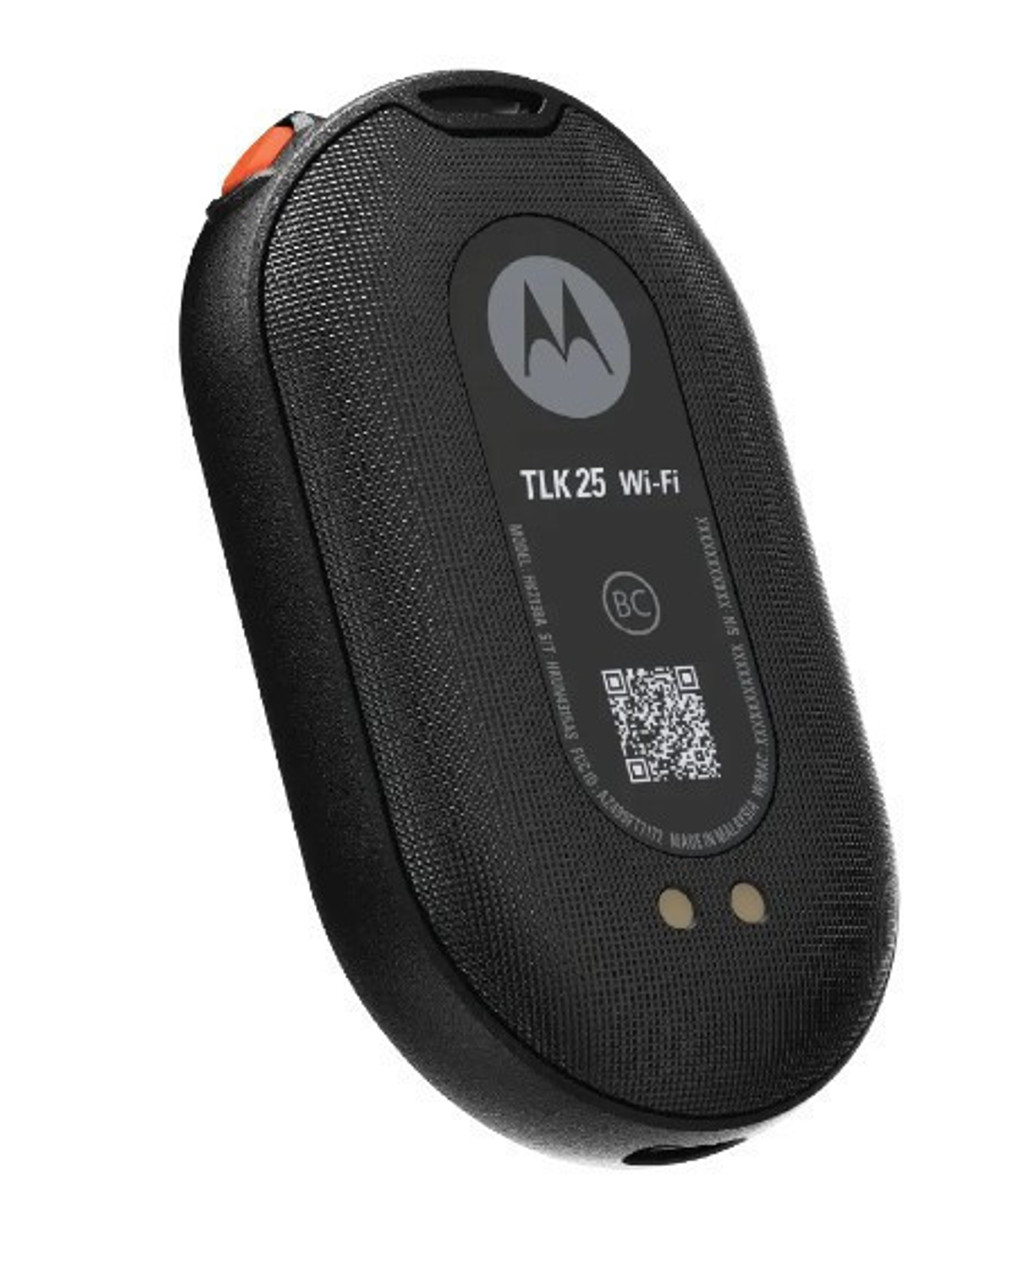 Motorola TLK 25 - A New Way to Two Way